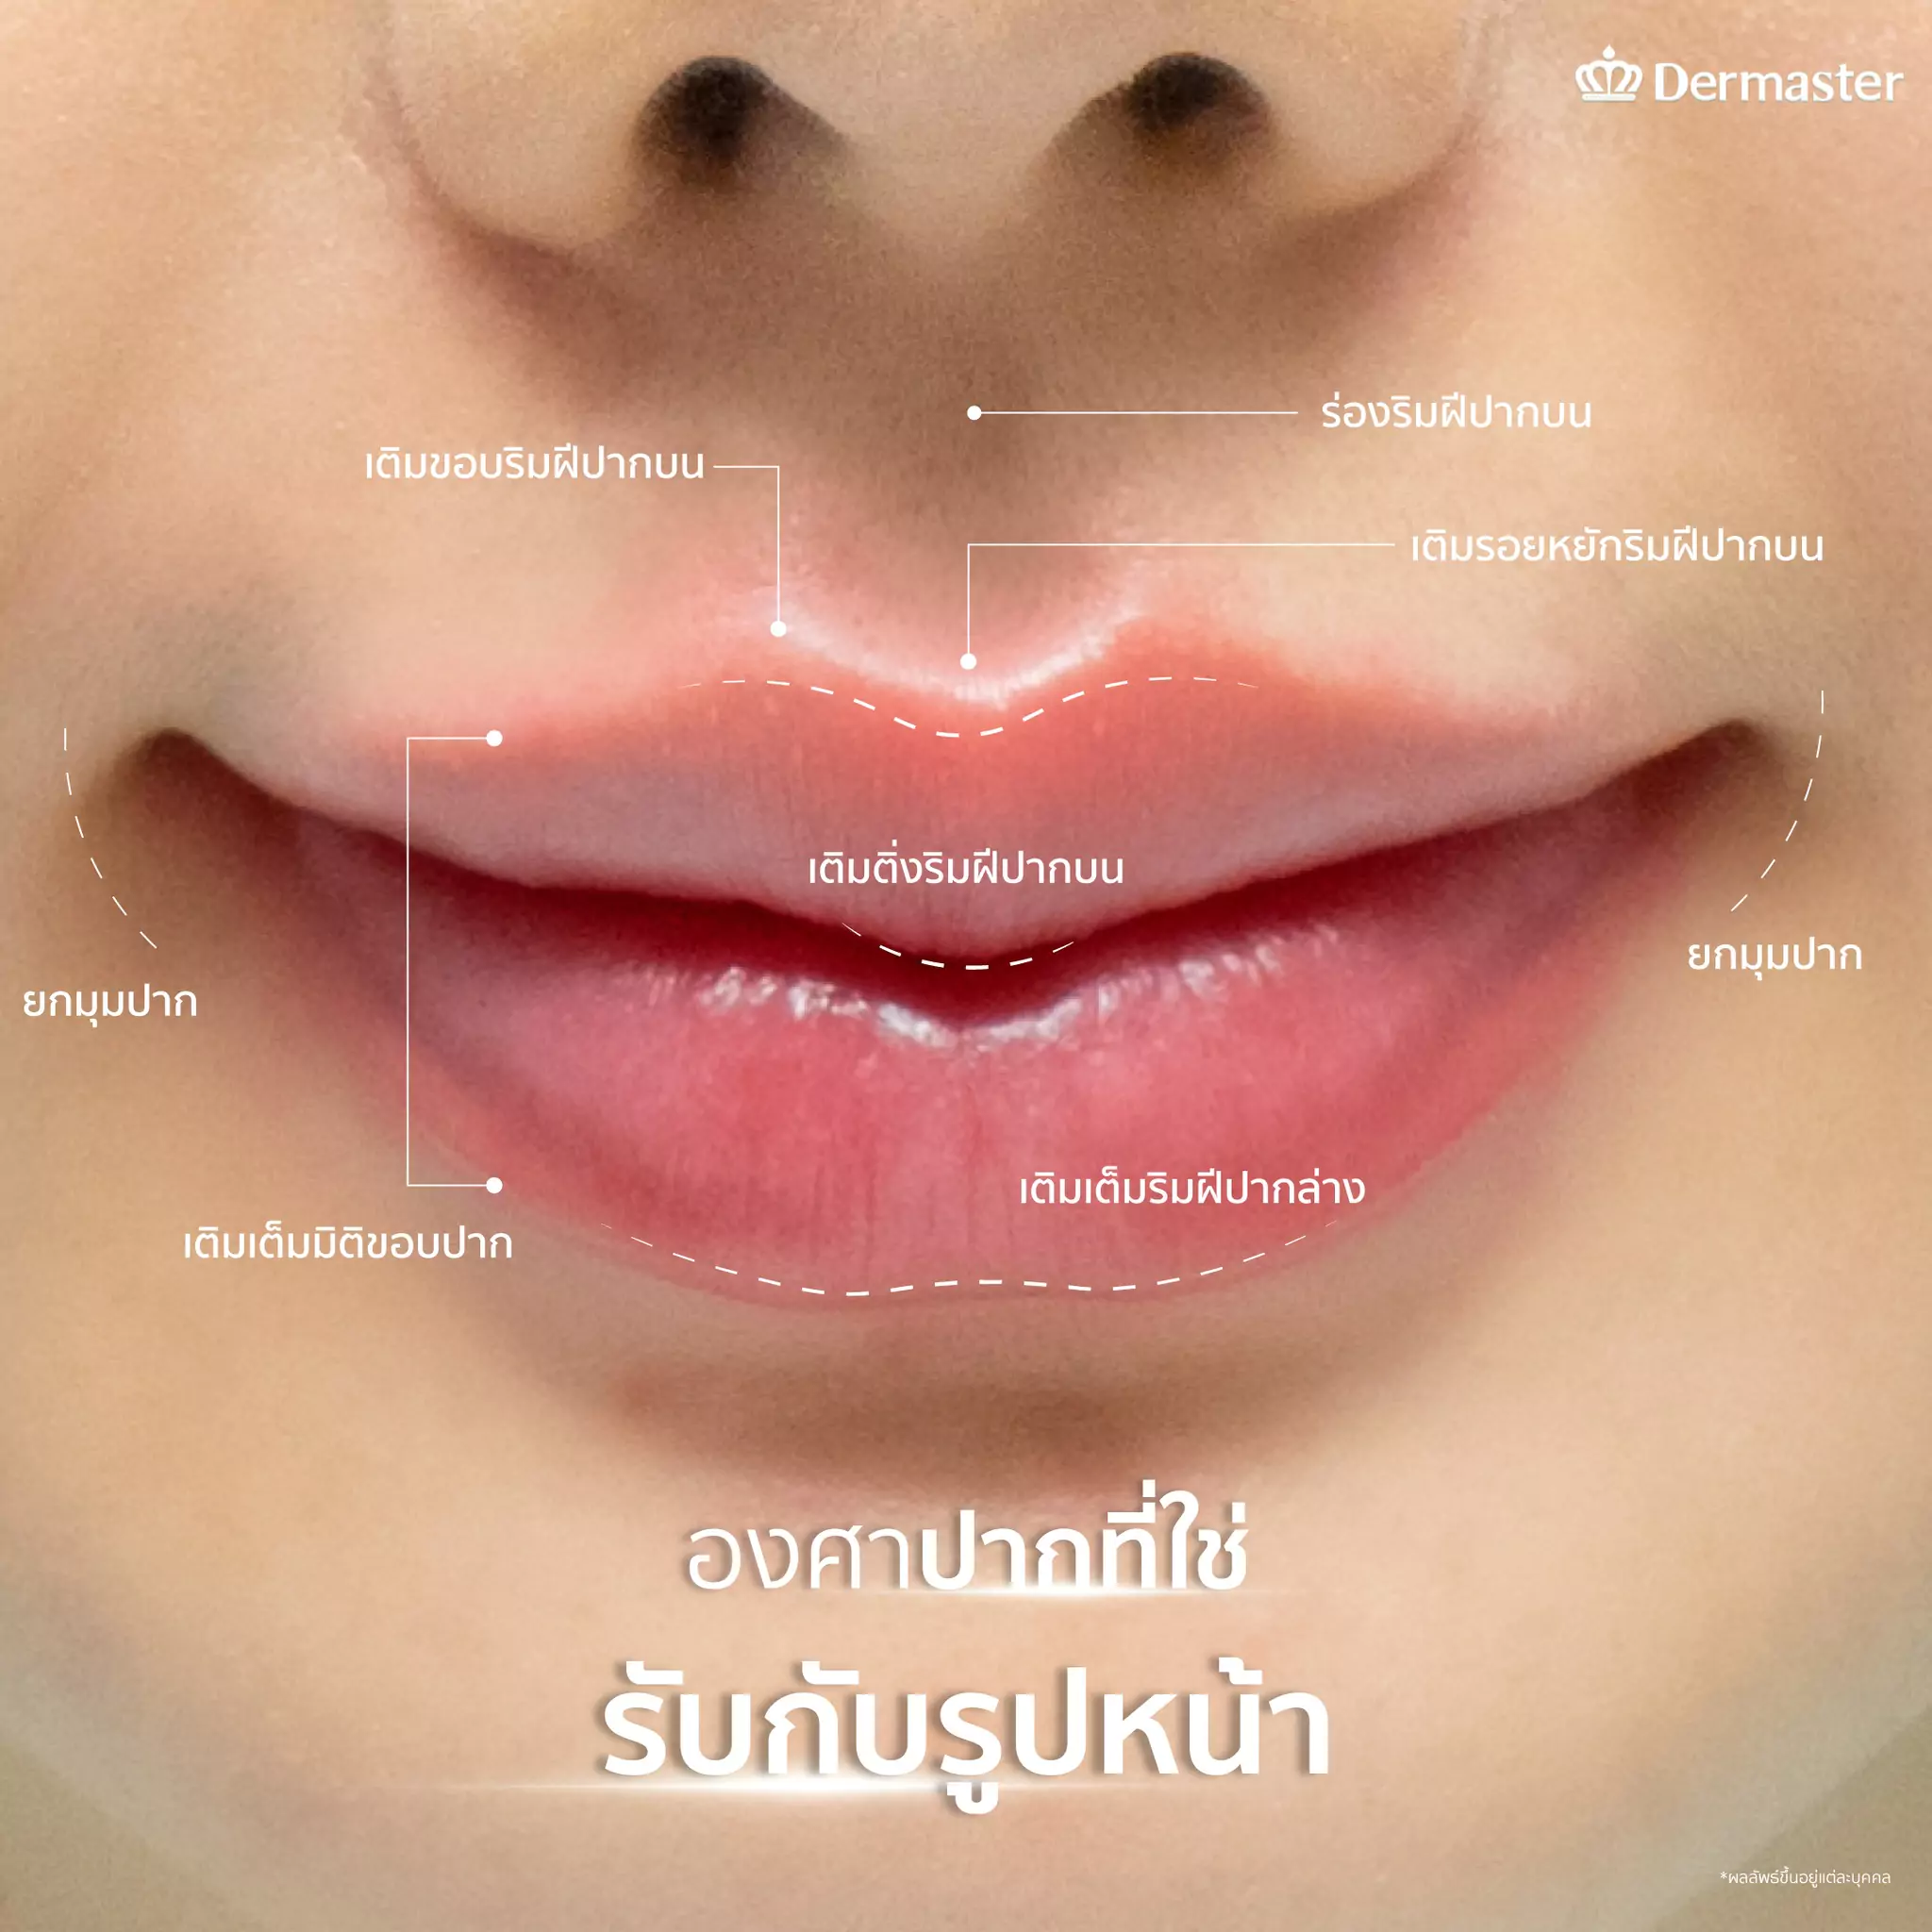 dermaster-thailand-lips-fillers-16